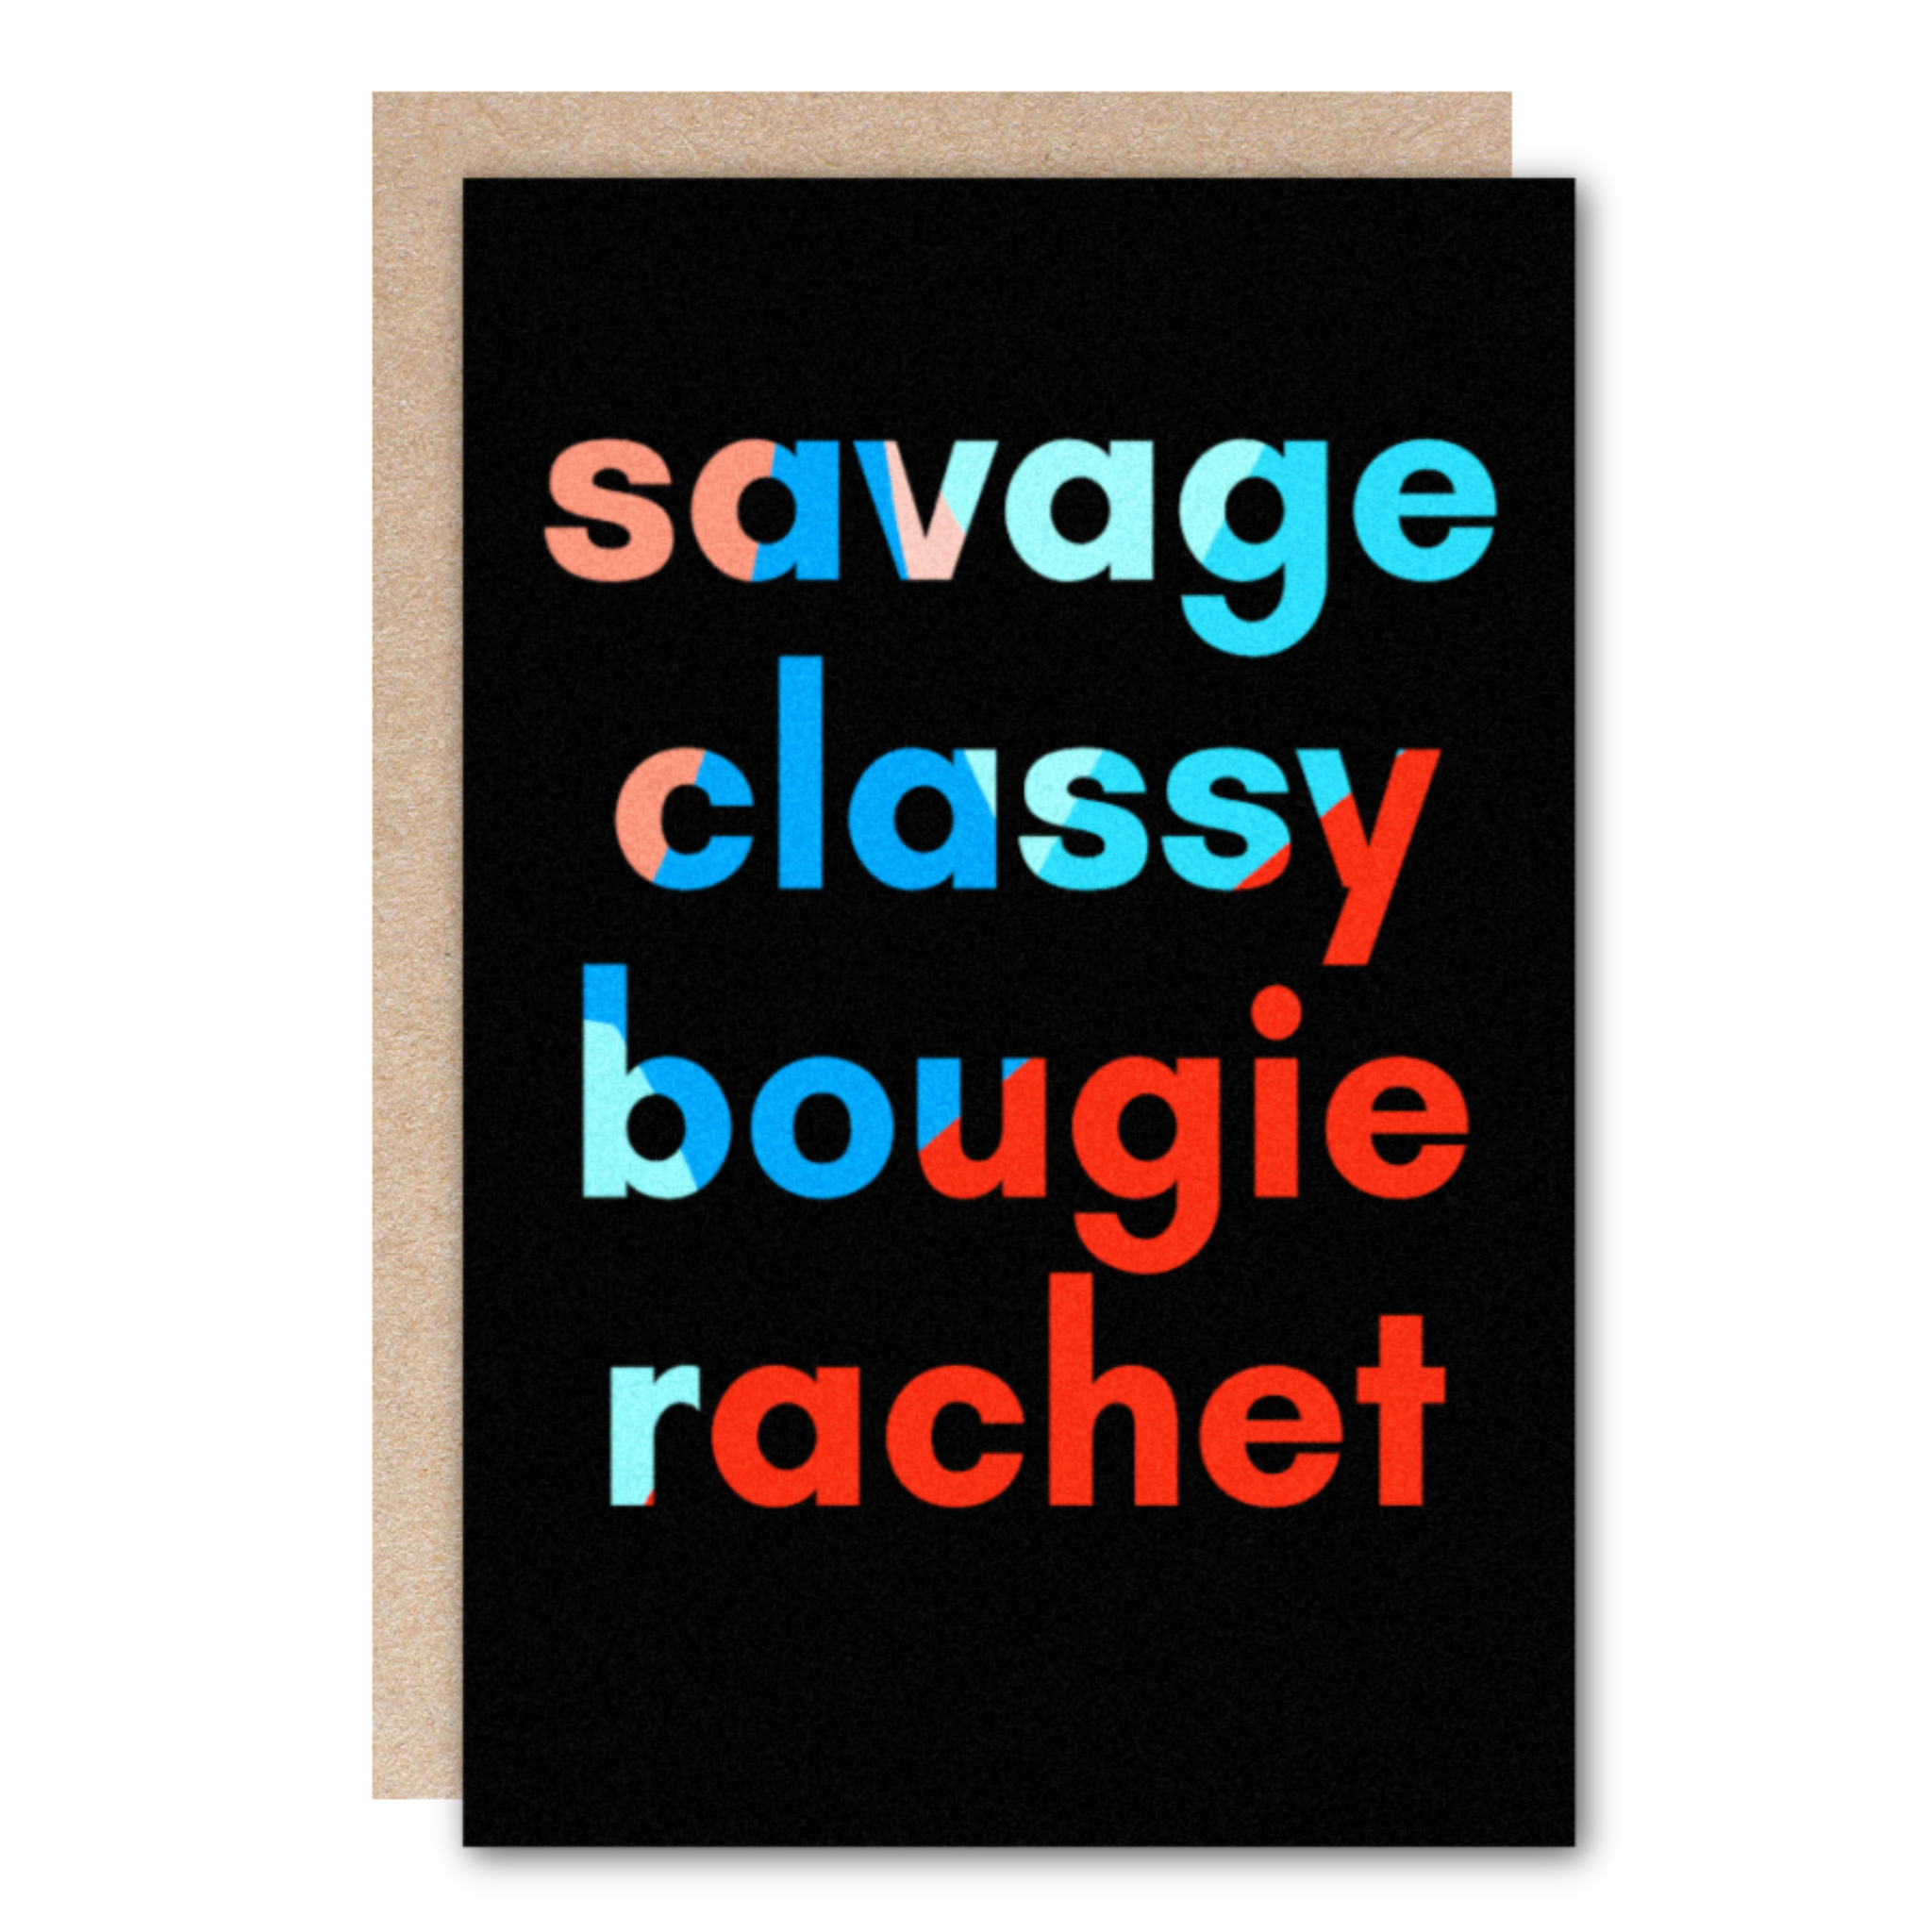 Savage, Classy, Bougie, Ratchet